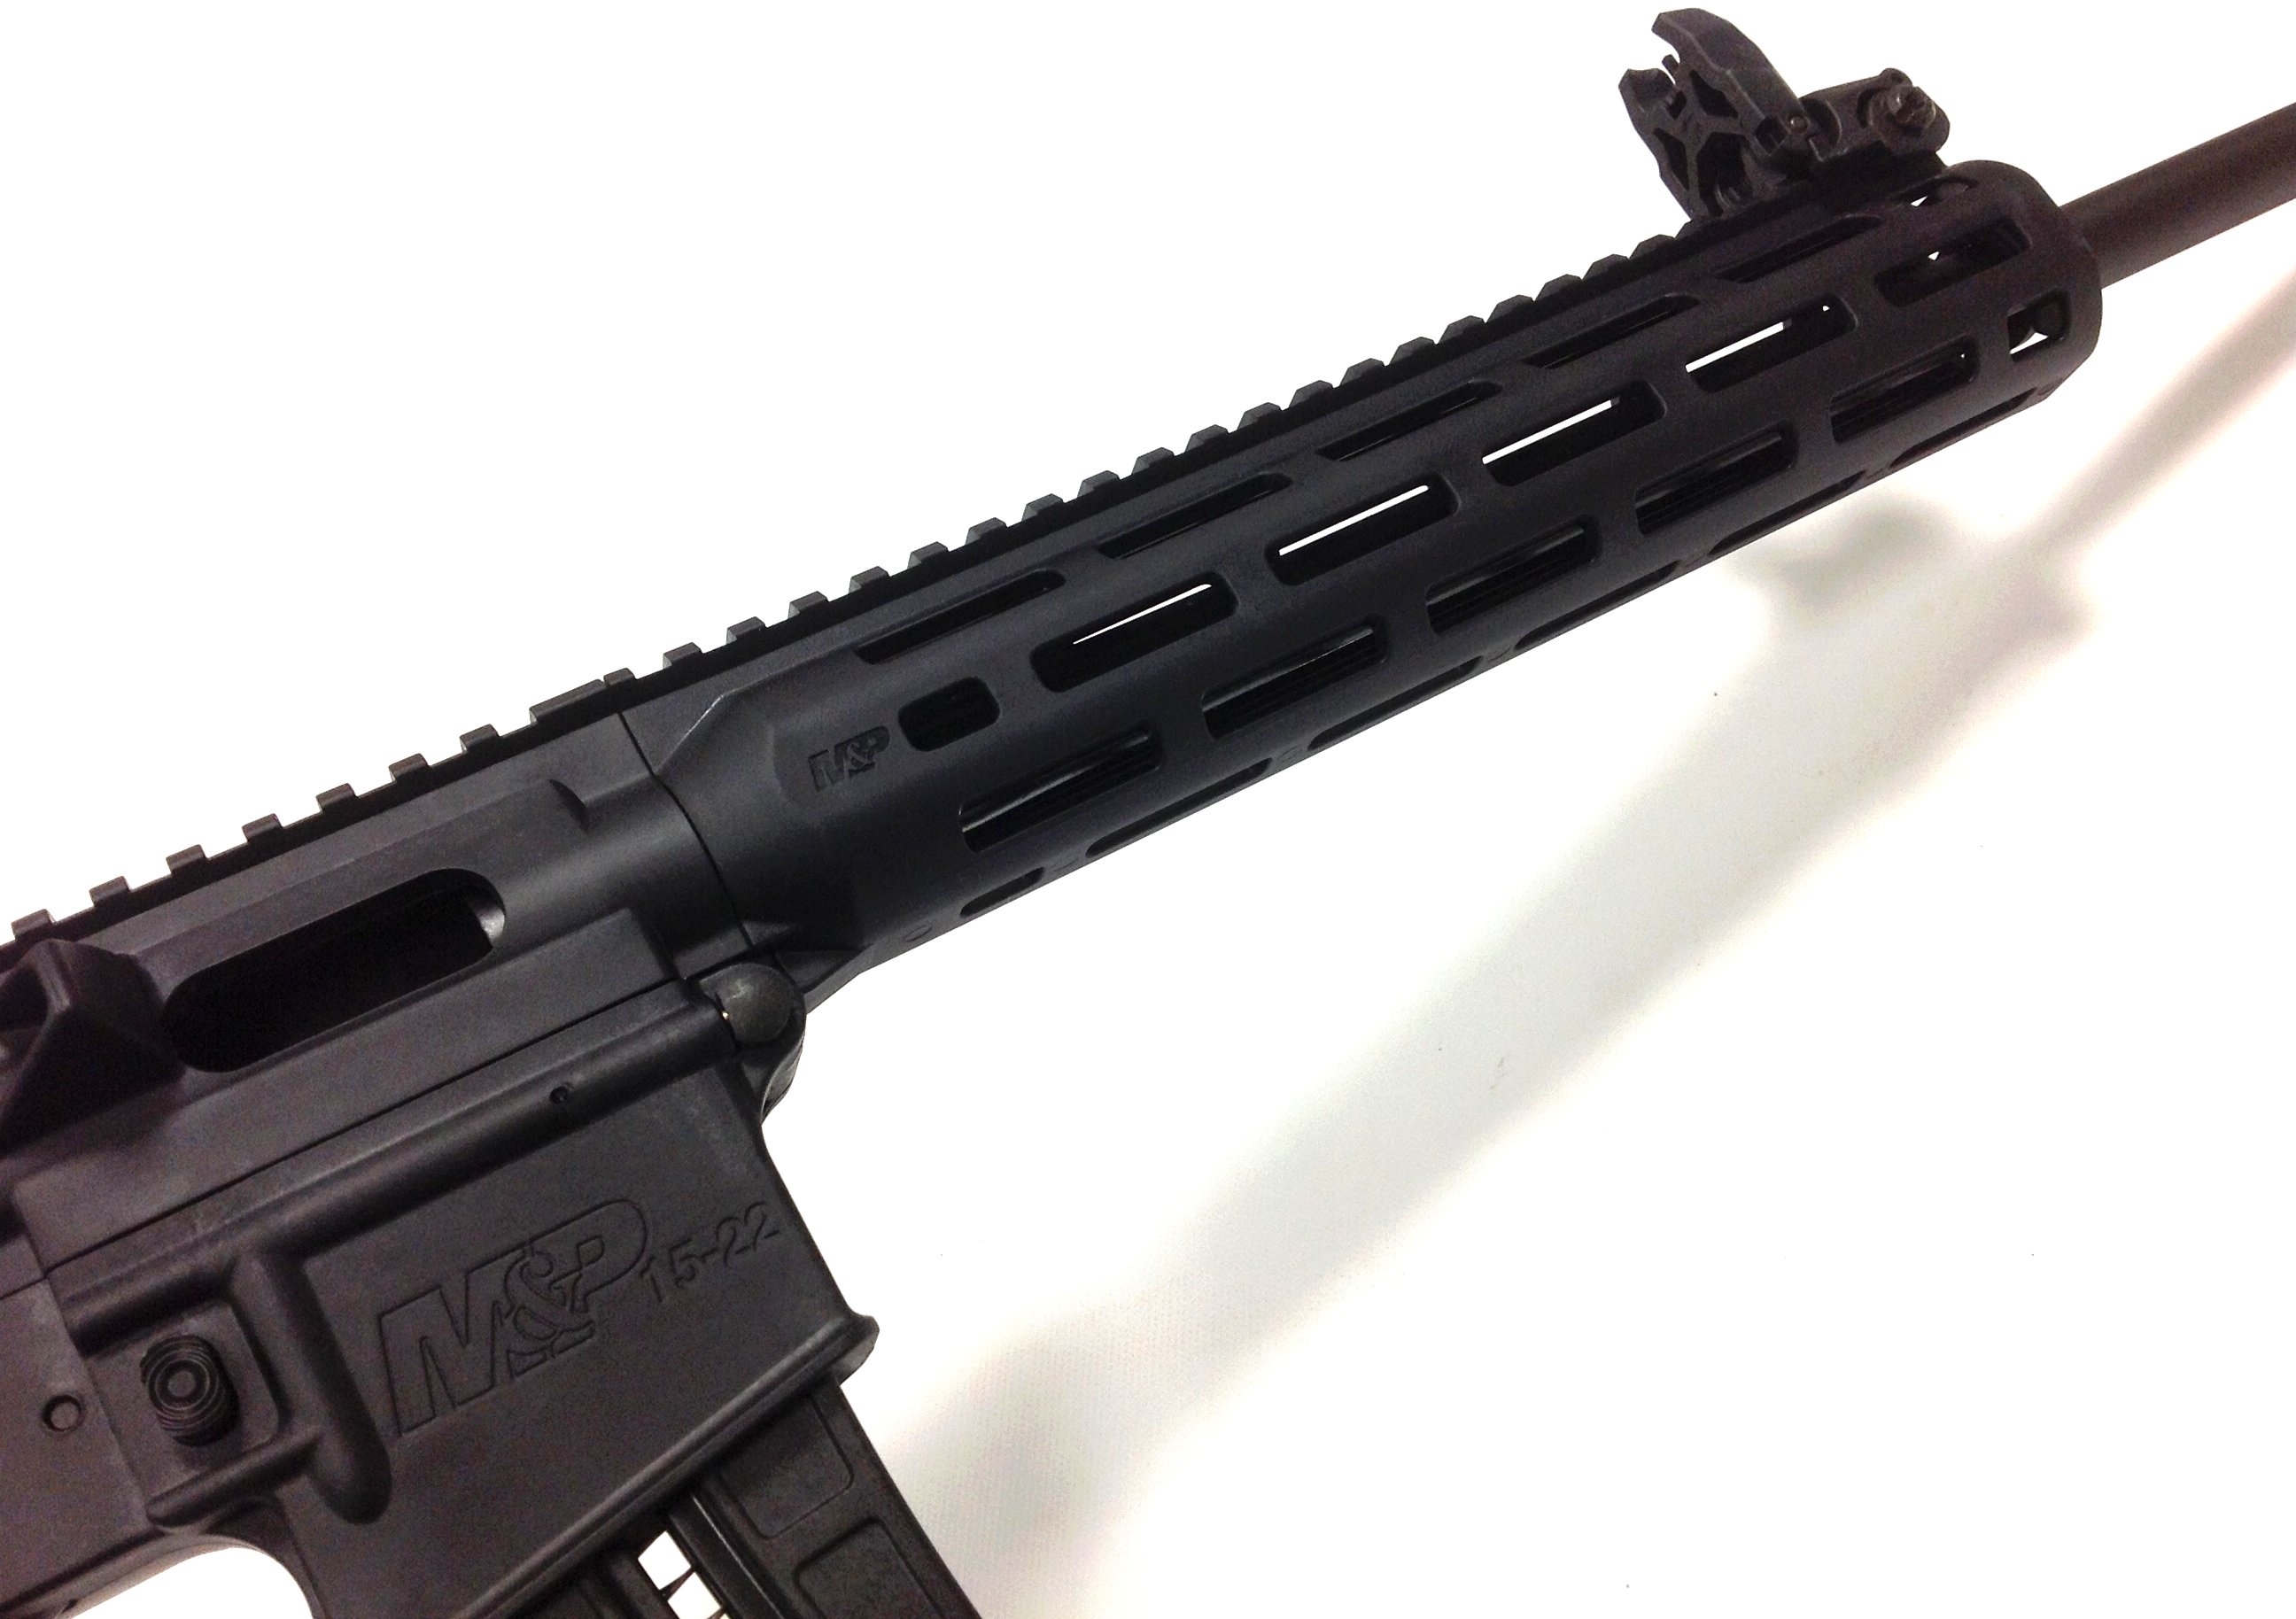 S&W 15-22 Sport black polymer semi-auto 22lr rifle